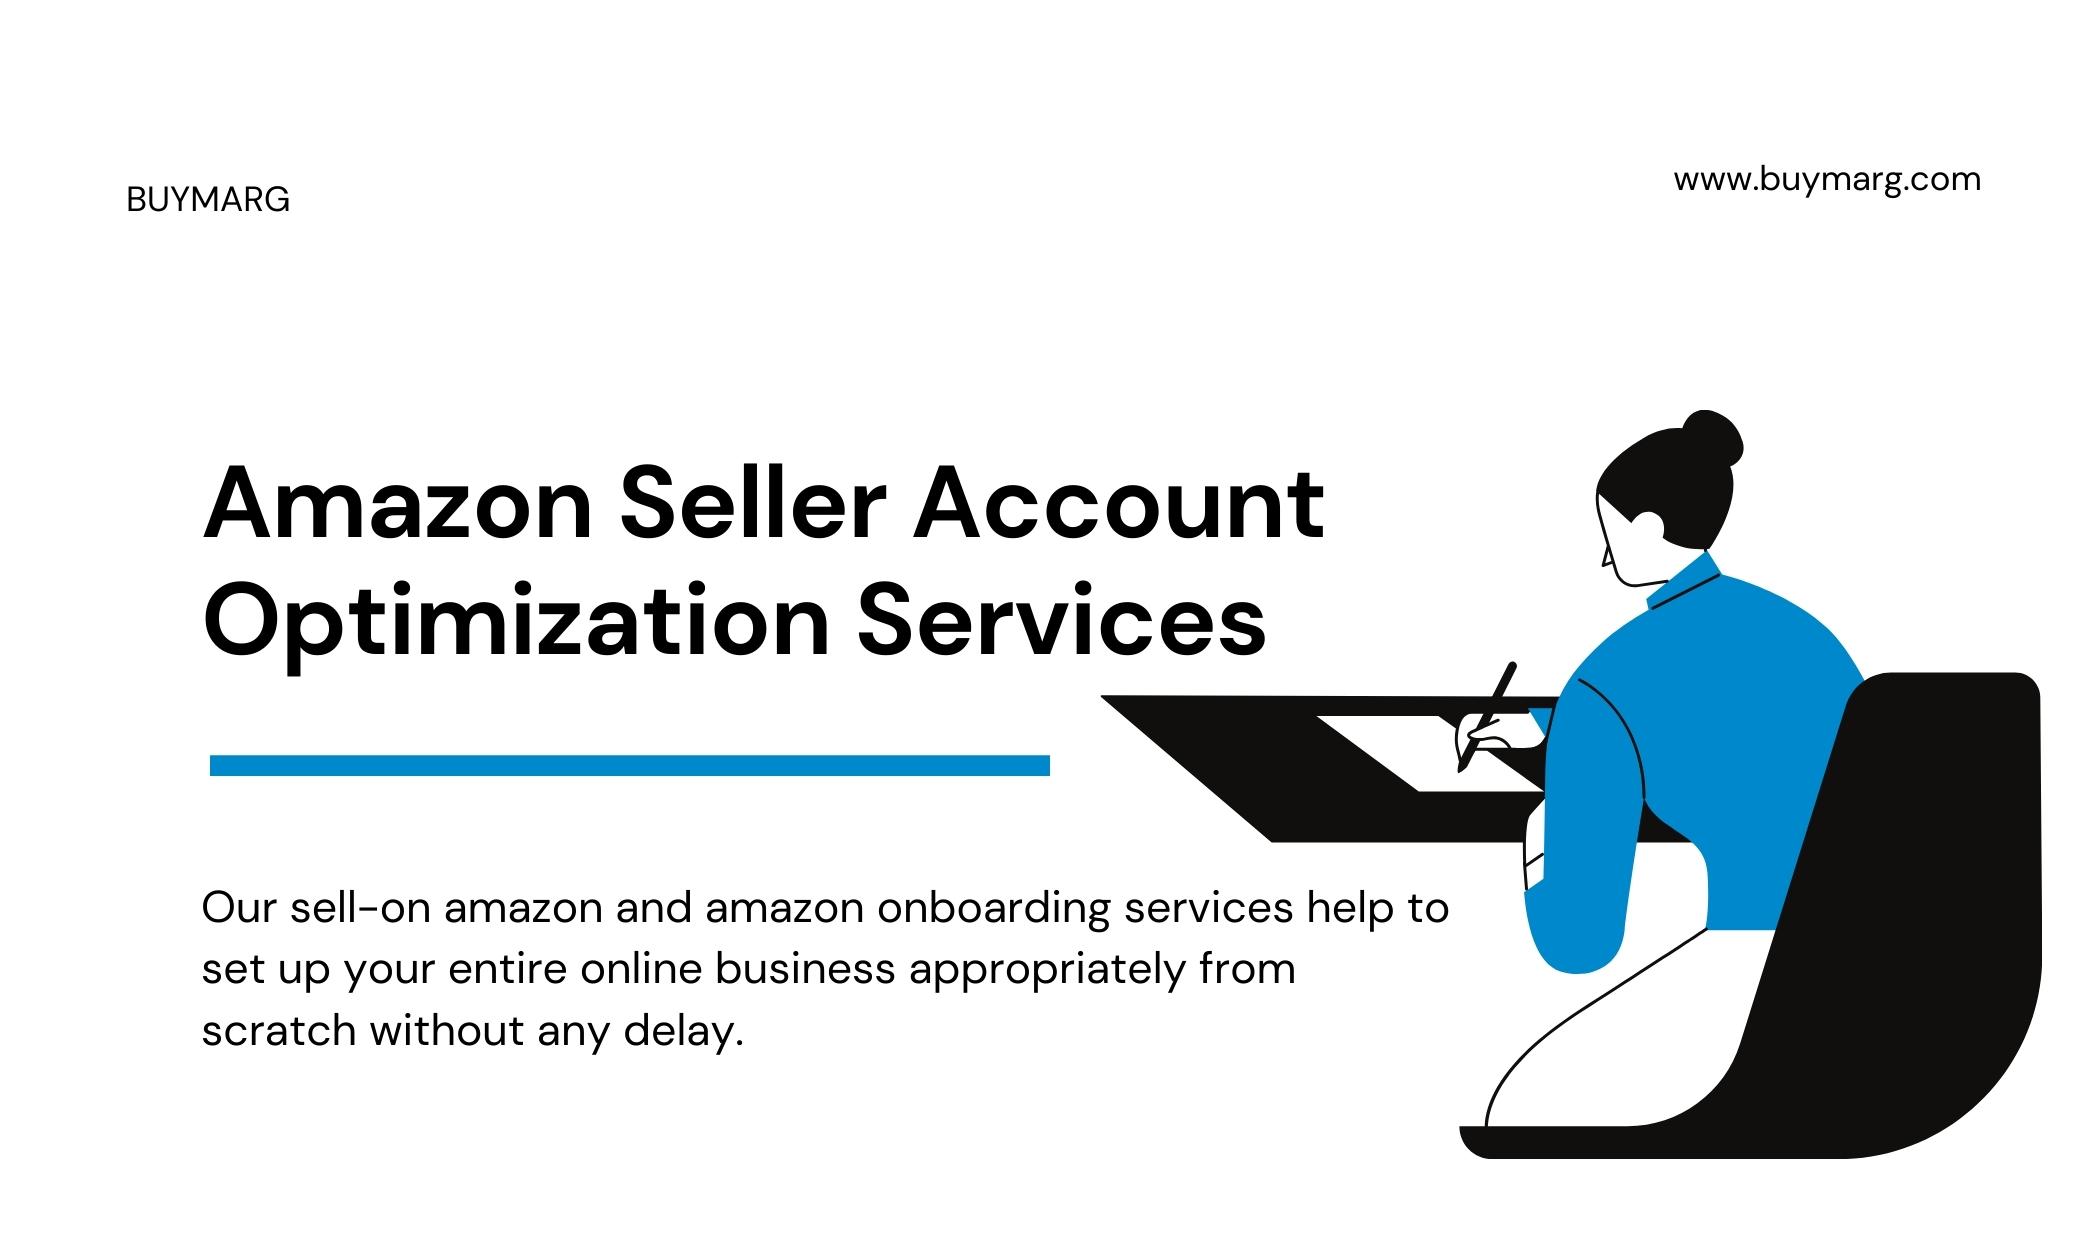 Amazon Seller Account Optimization Services